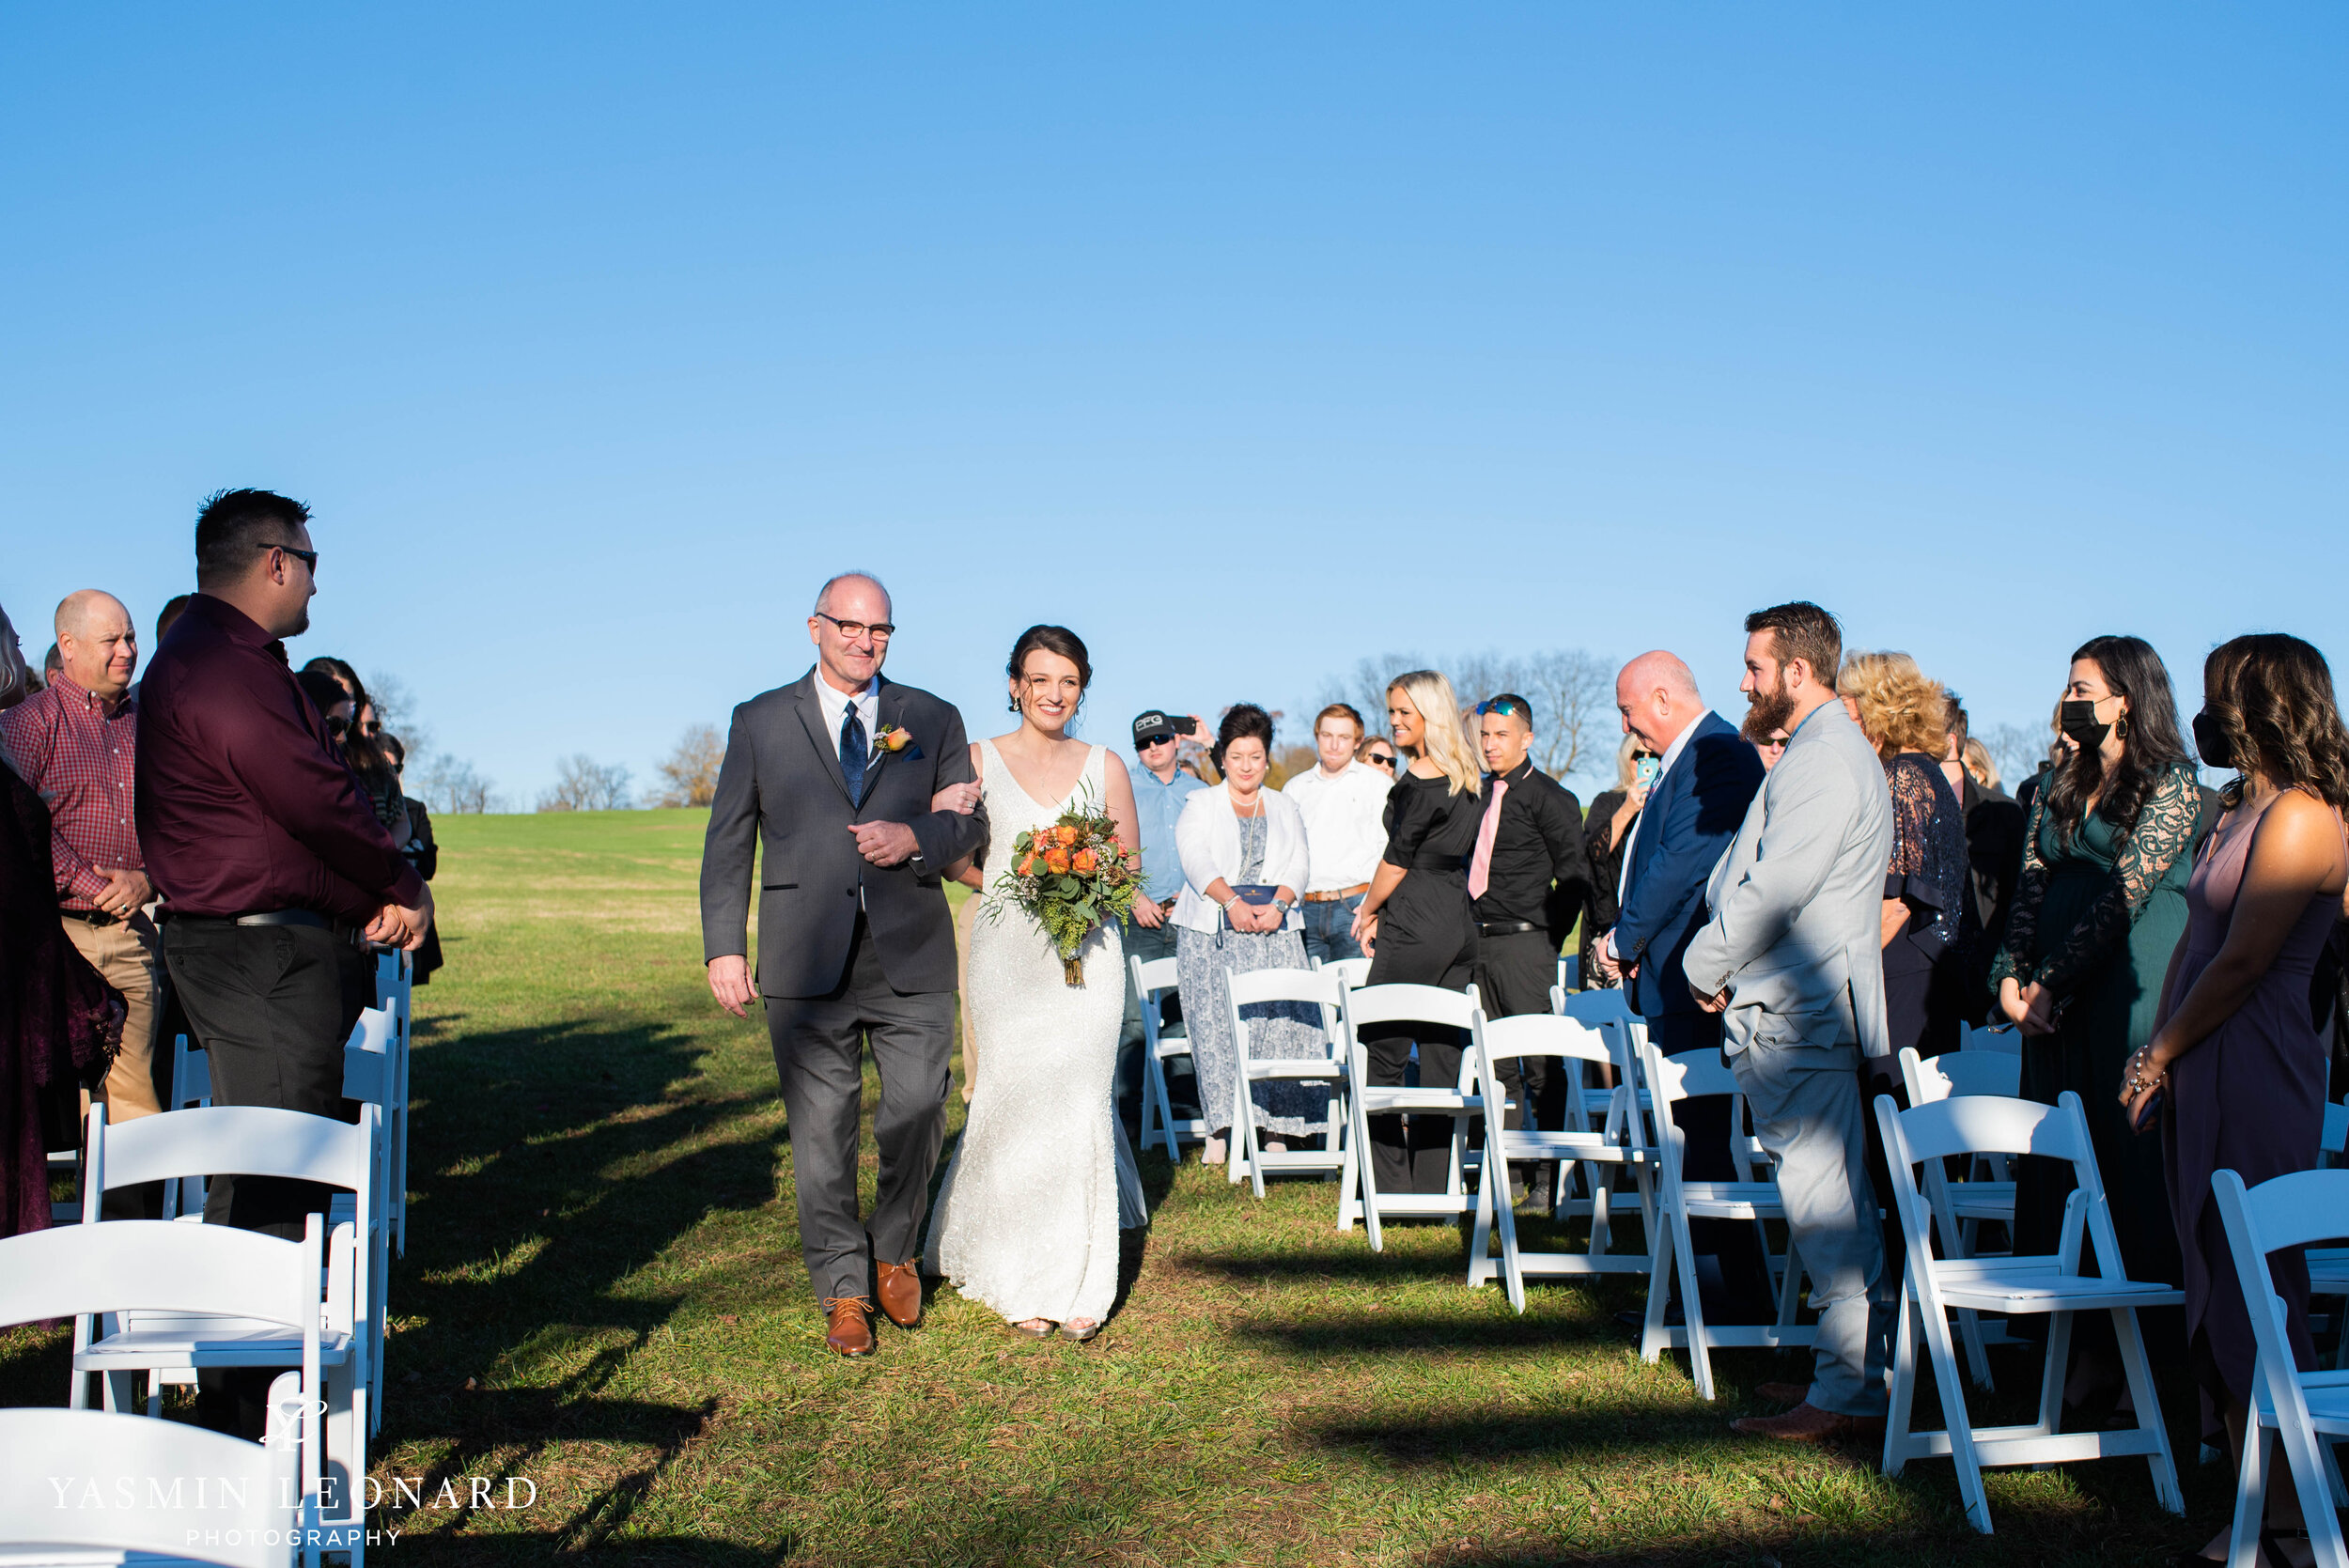 Jared and Katy - Adaumont Farms - High Point Weddings - NC Barn Weddings - Yasmin Leonard Photography-21.jpg